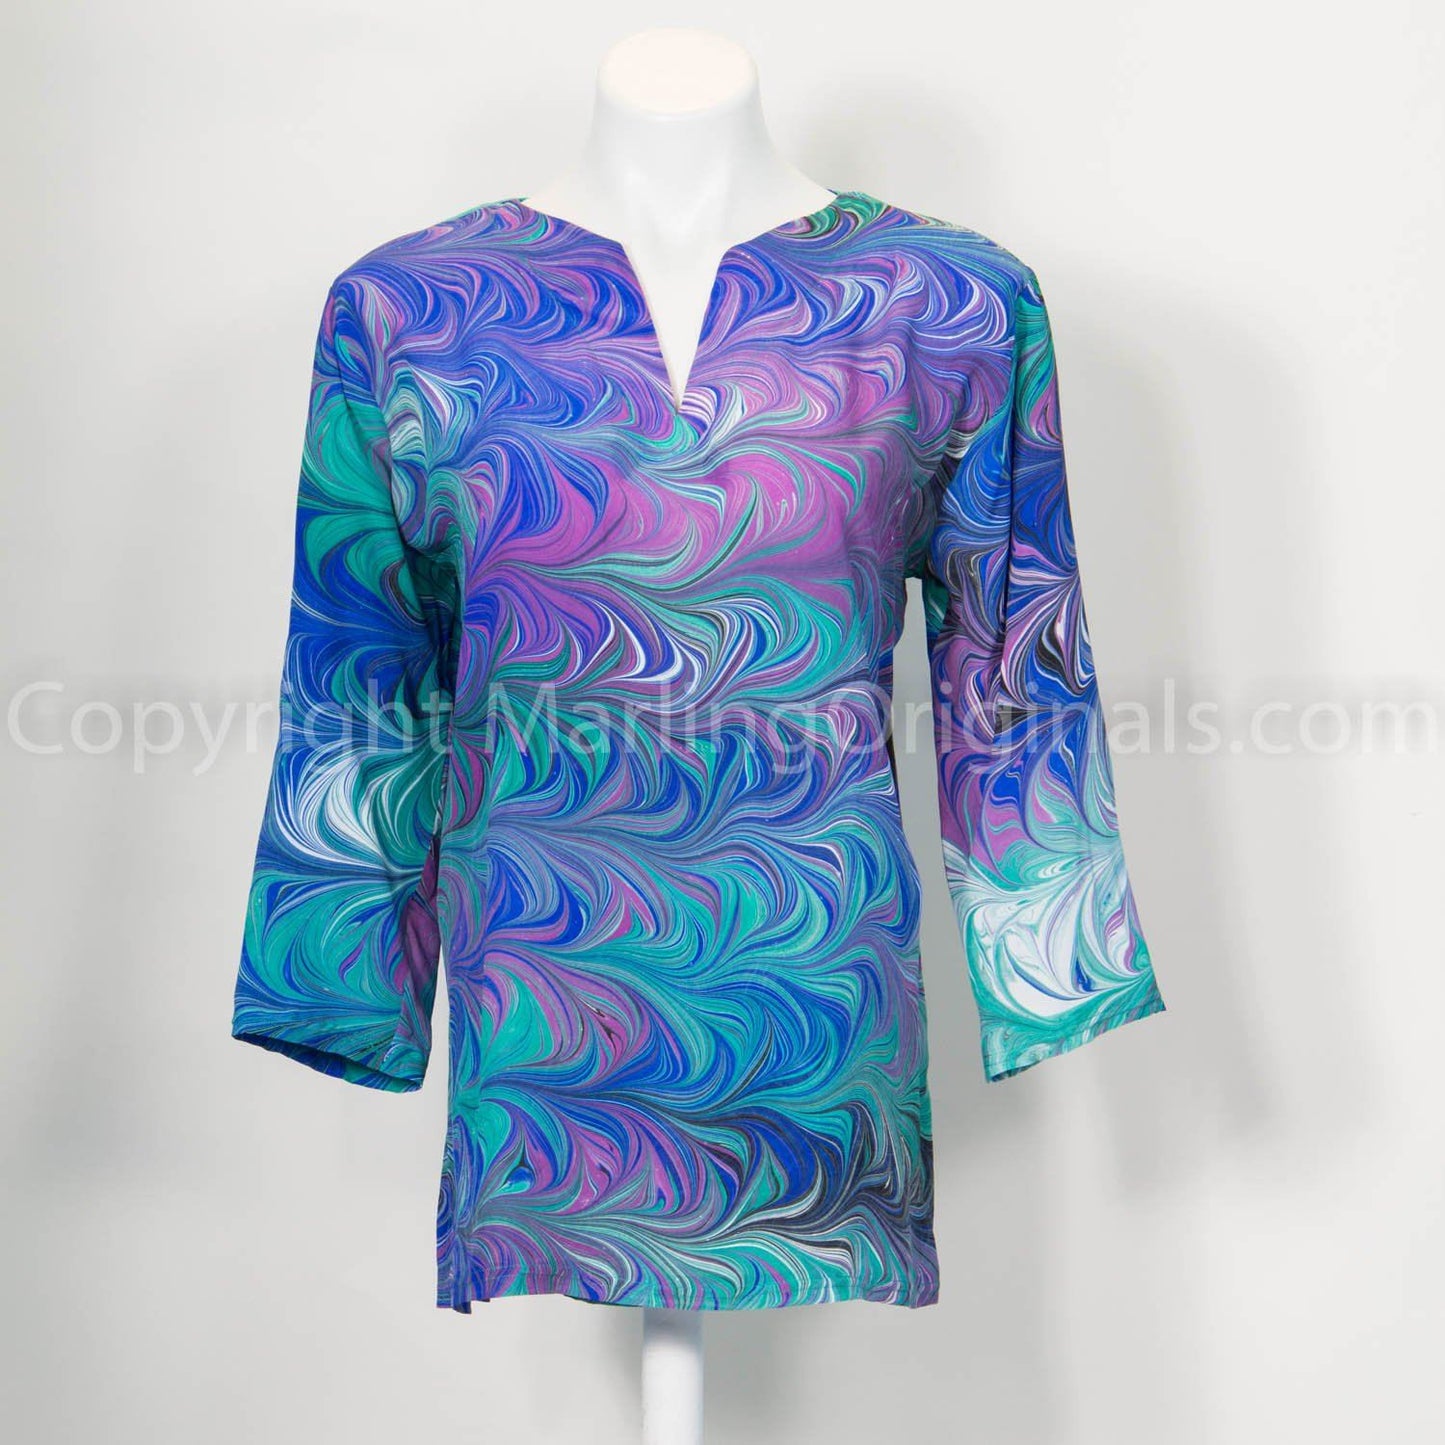 marbled silk tunic in blue, green, violet.  V-notch neck, long sleeves, side slits